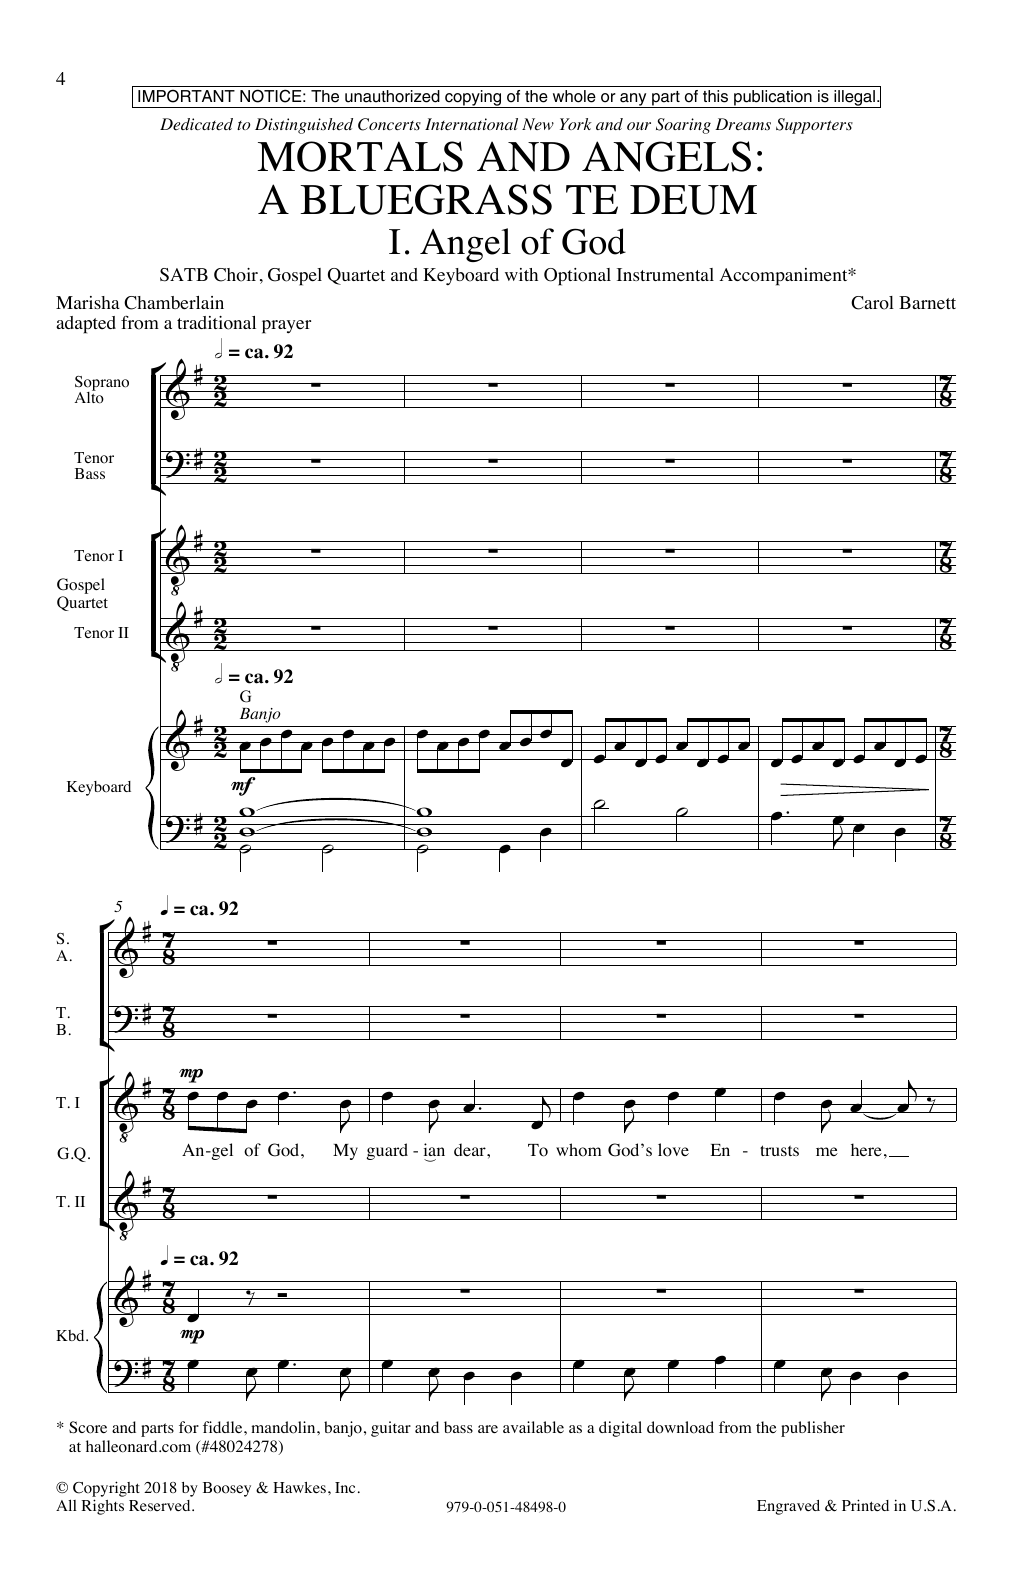 Carol Barnett Mortals & Angels: A Bluegrass Te Deum Sheet Music Notes & Chords for SATB Choir - Download or Print PDF